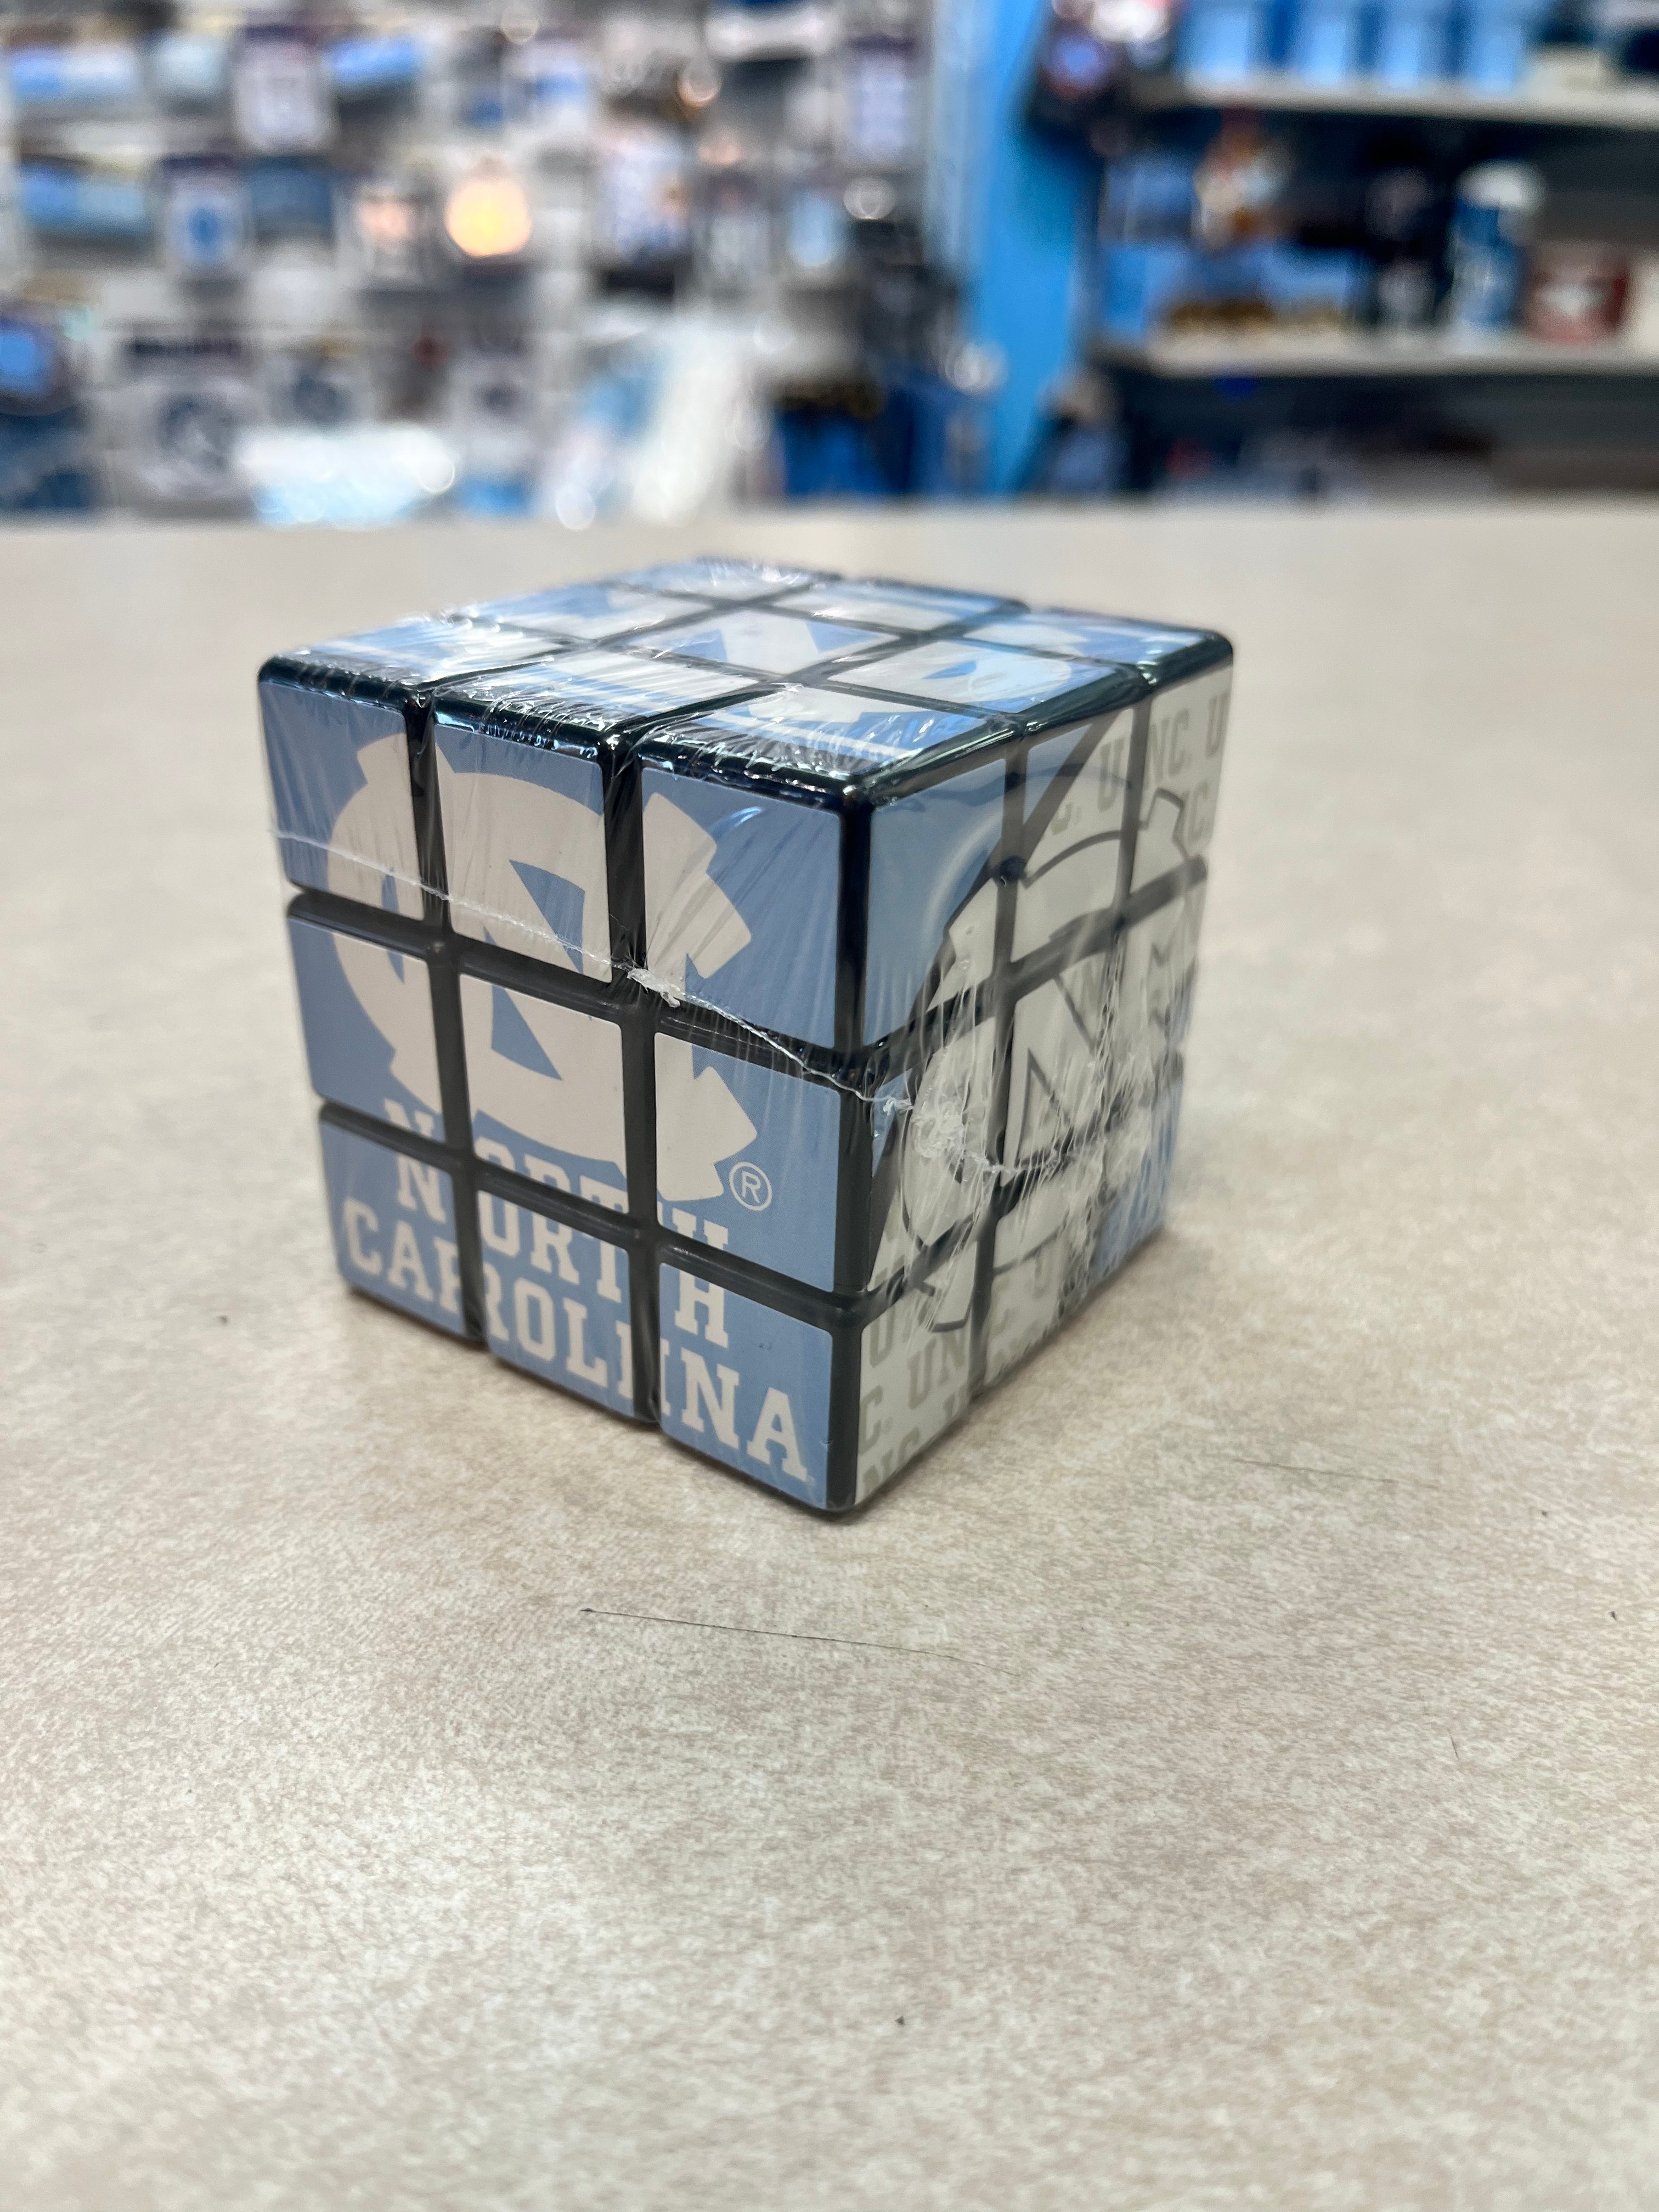 Carolina Rubik's Cube